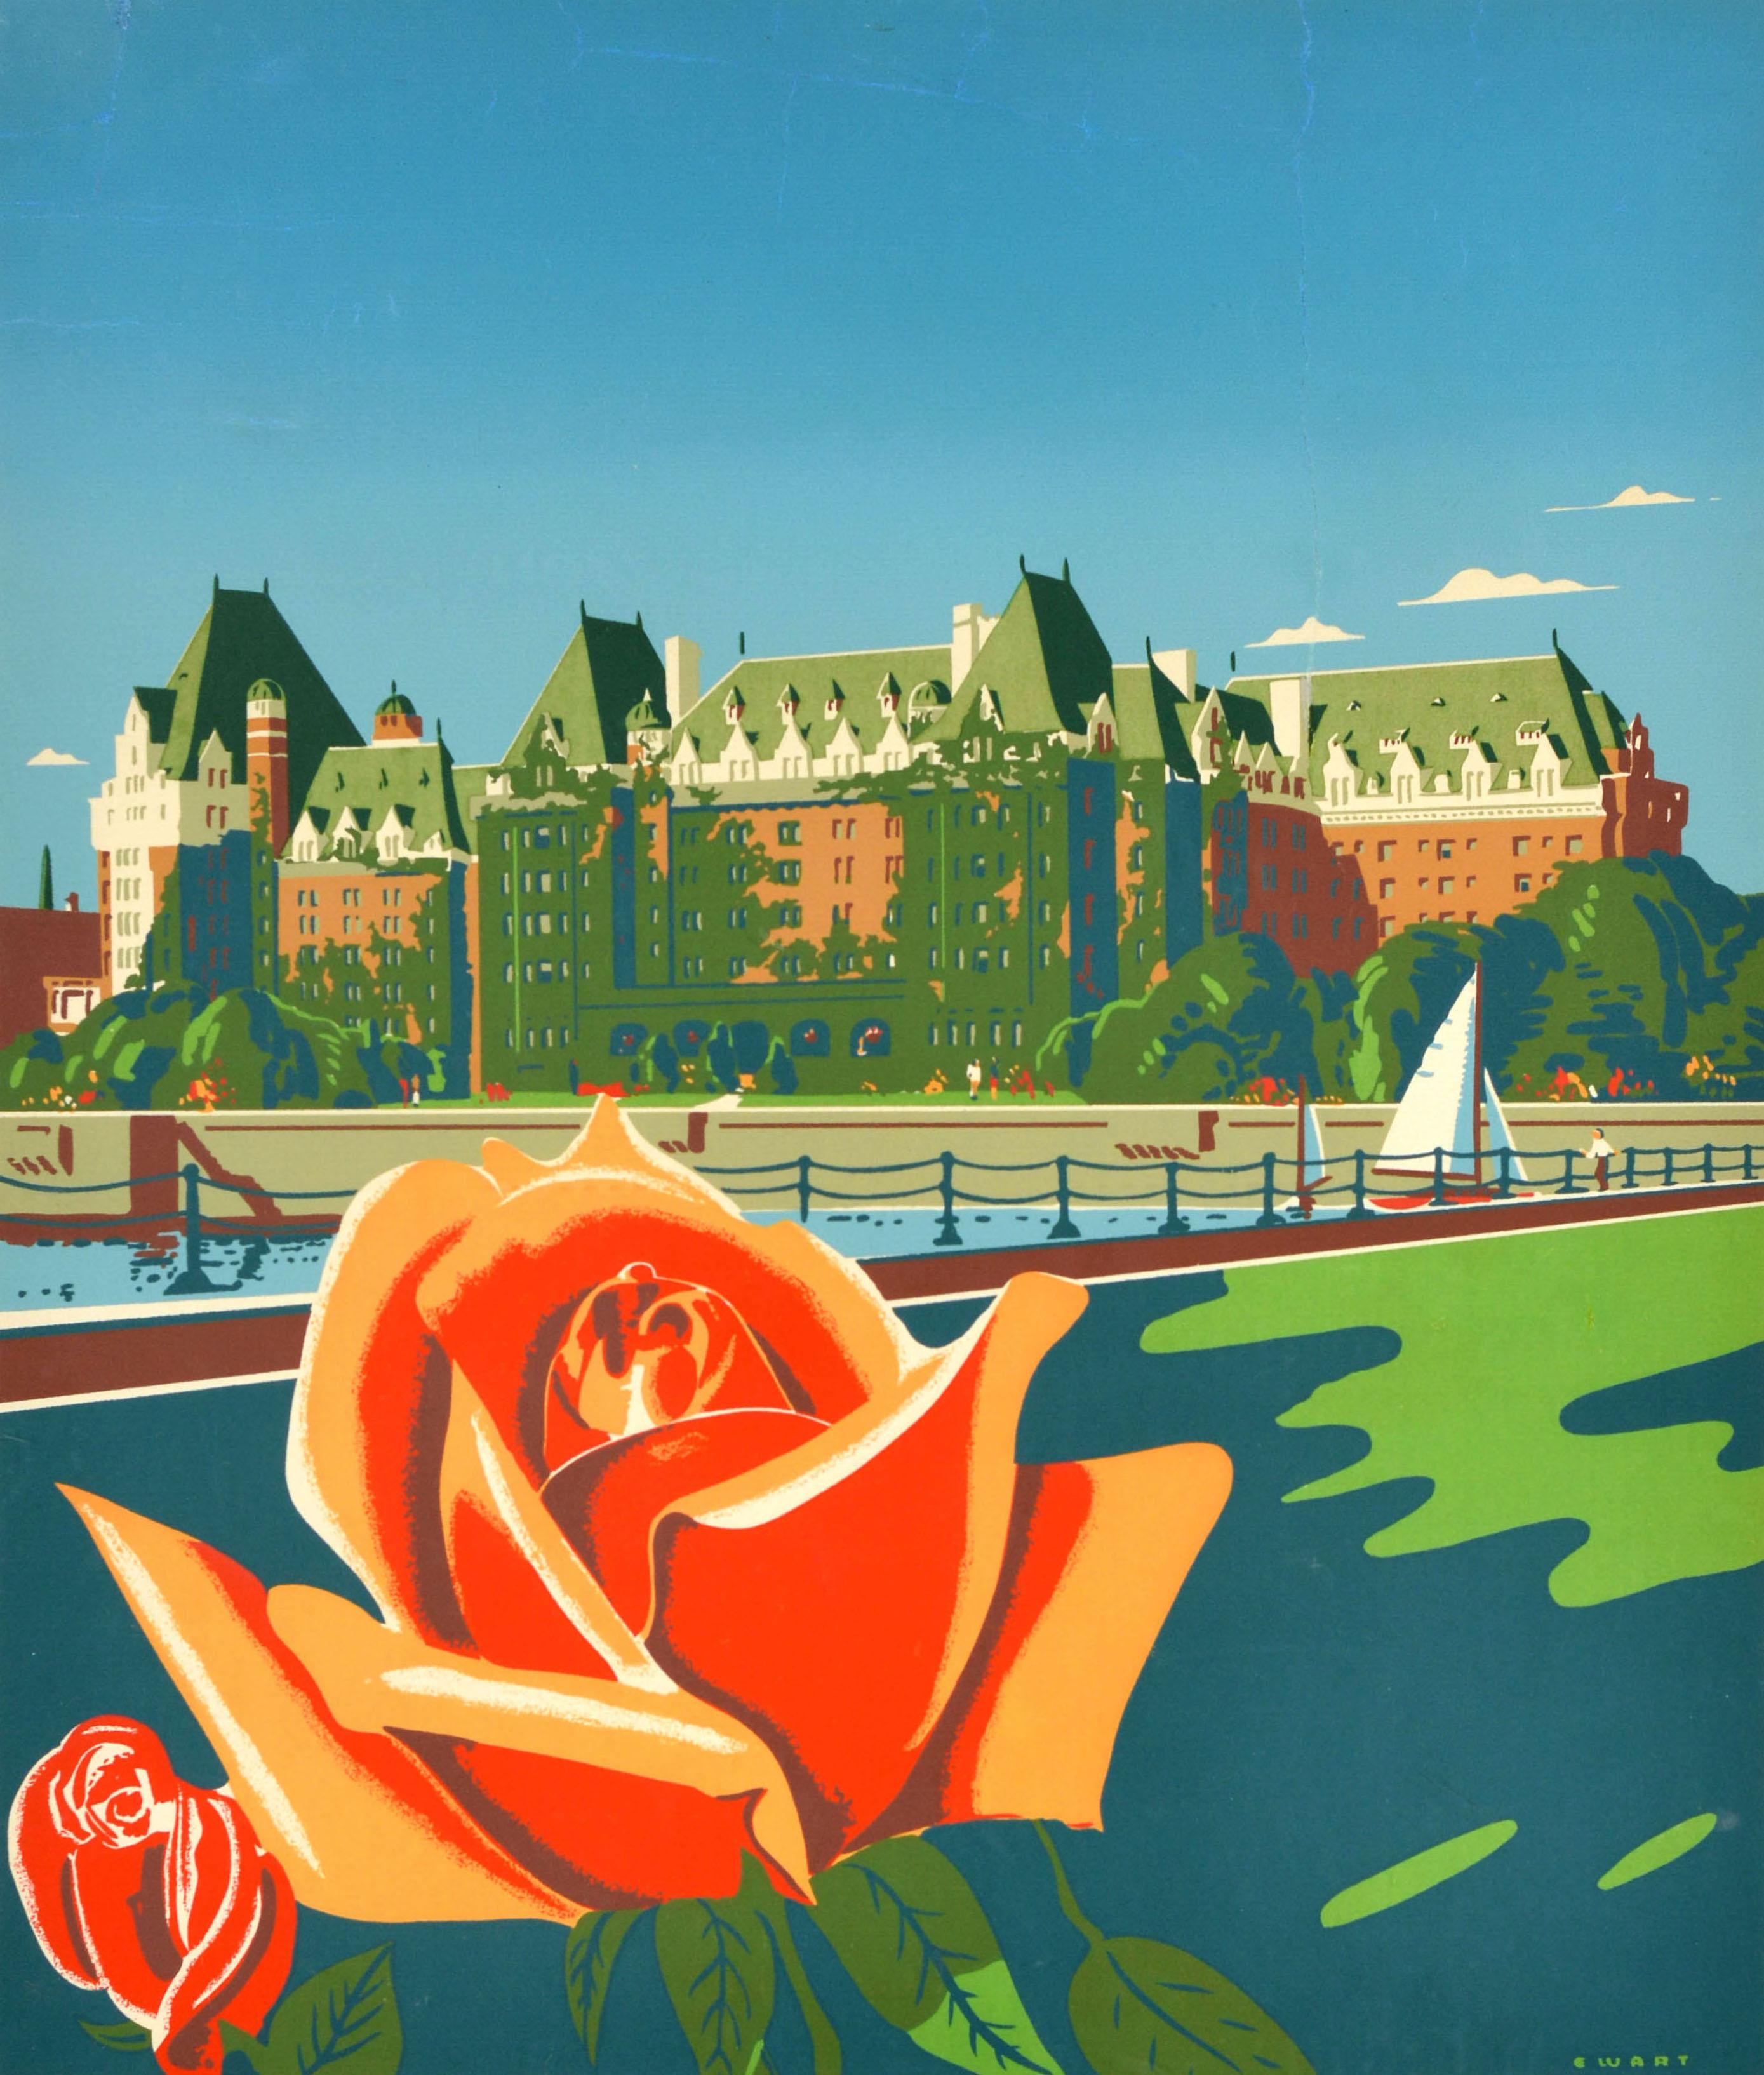 Original Vintage Travel Advertising Poster Empress Canadian Pacific Hotel Ewart - Print by Peter Ewart